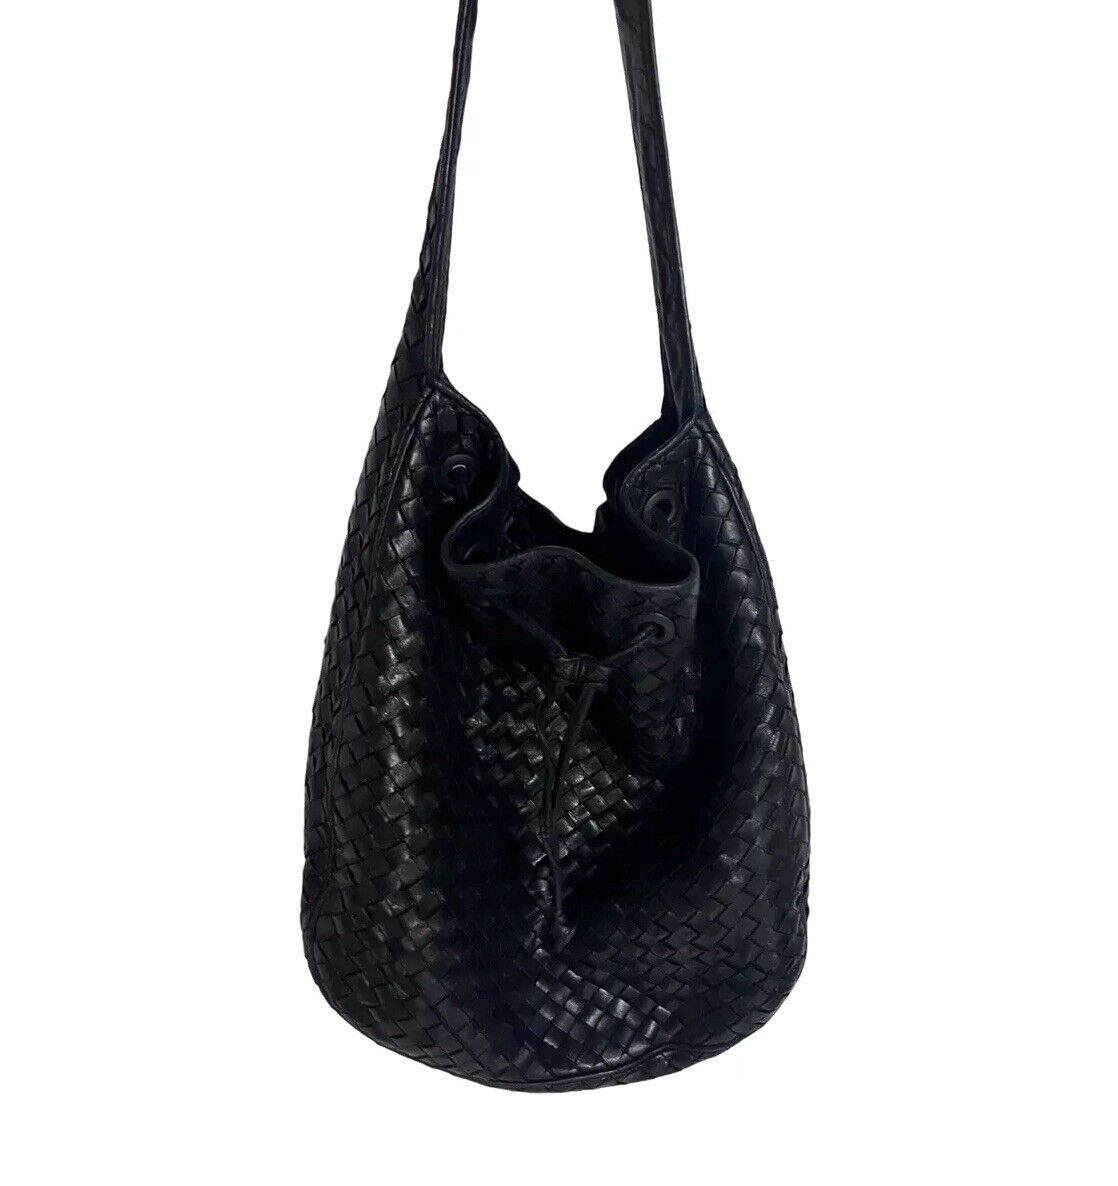 Vintage Bottega Veneta Intrecciato Woven Black Leather Hobo Bag Purse